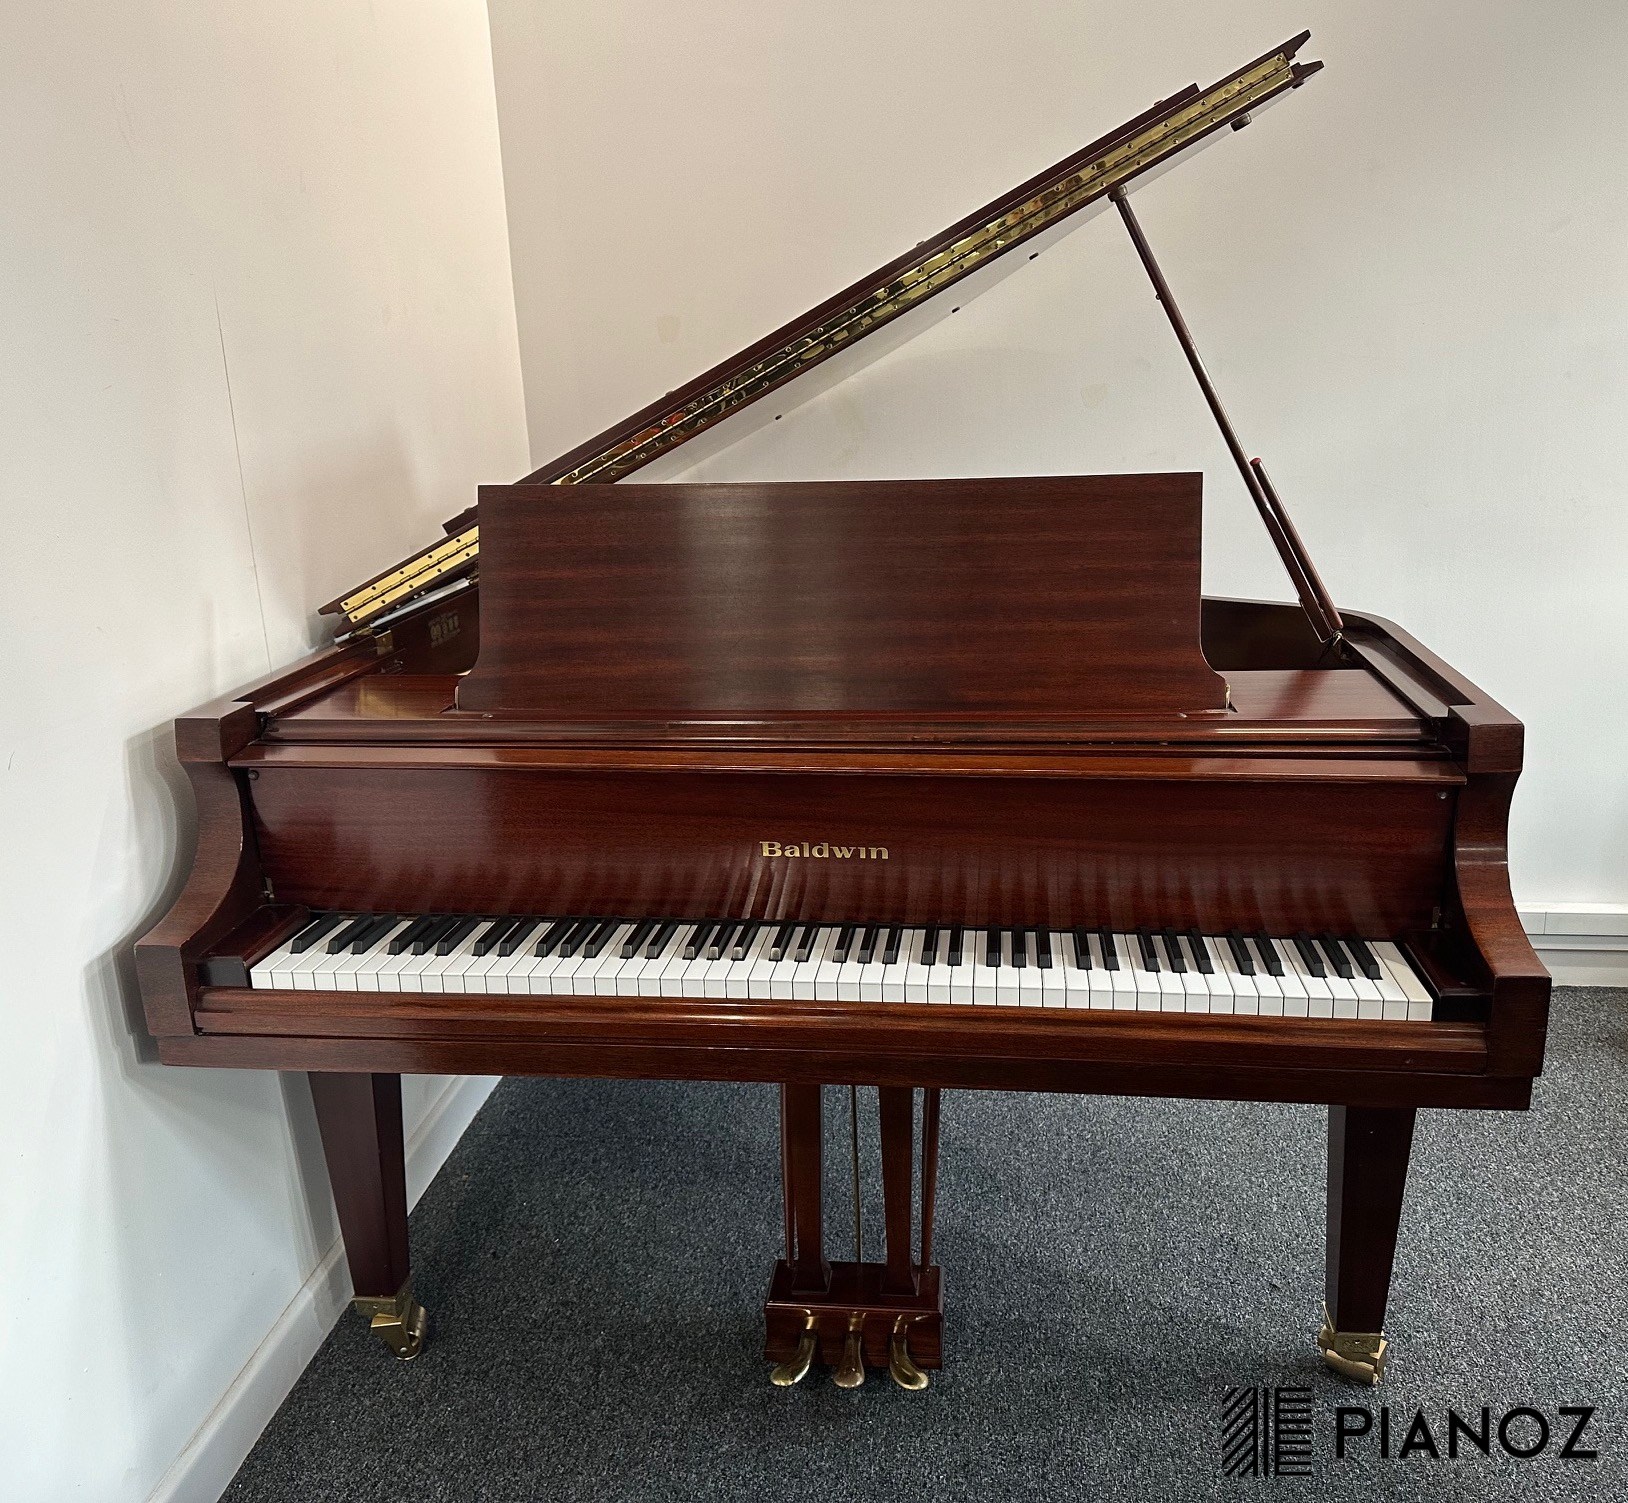 Baldwin Model M Artist Series Baby Grand Piano piano for sale in UK